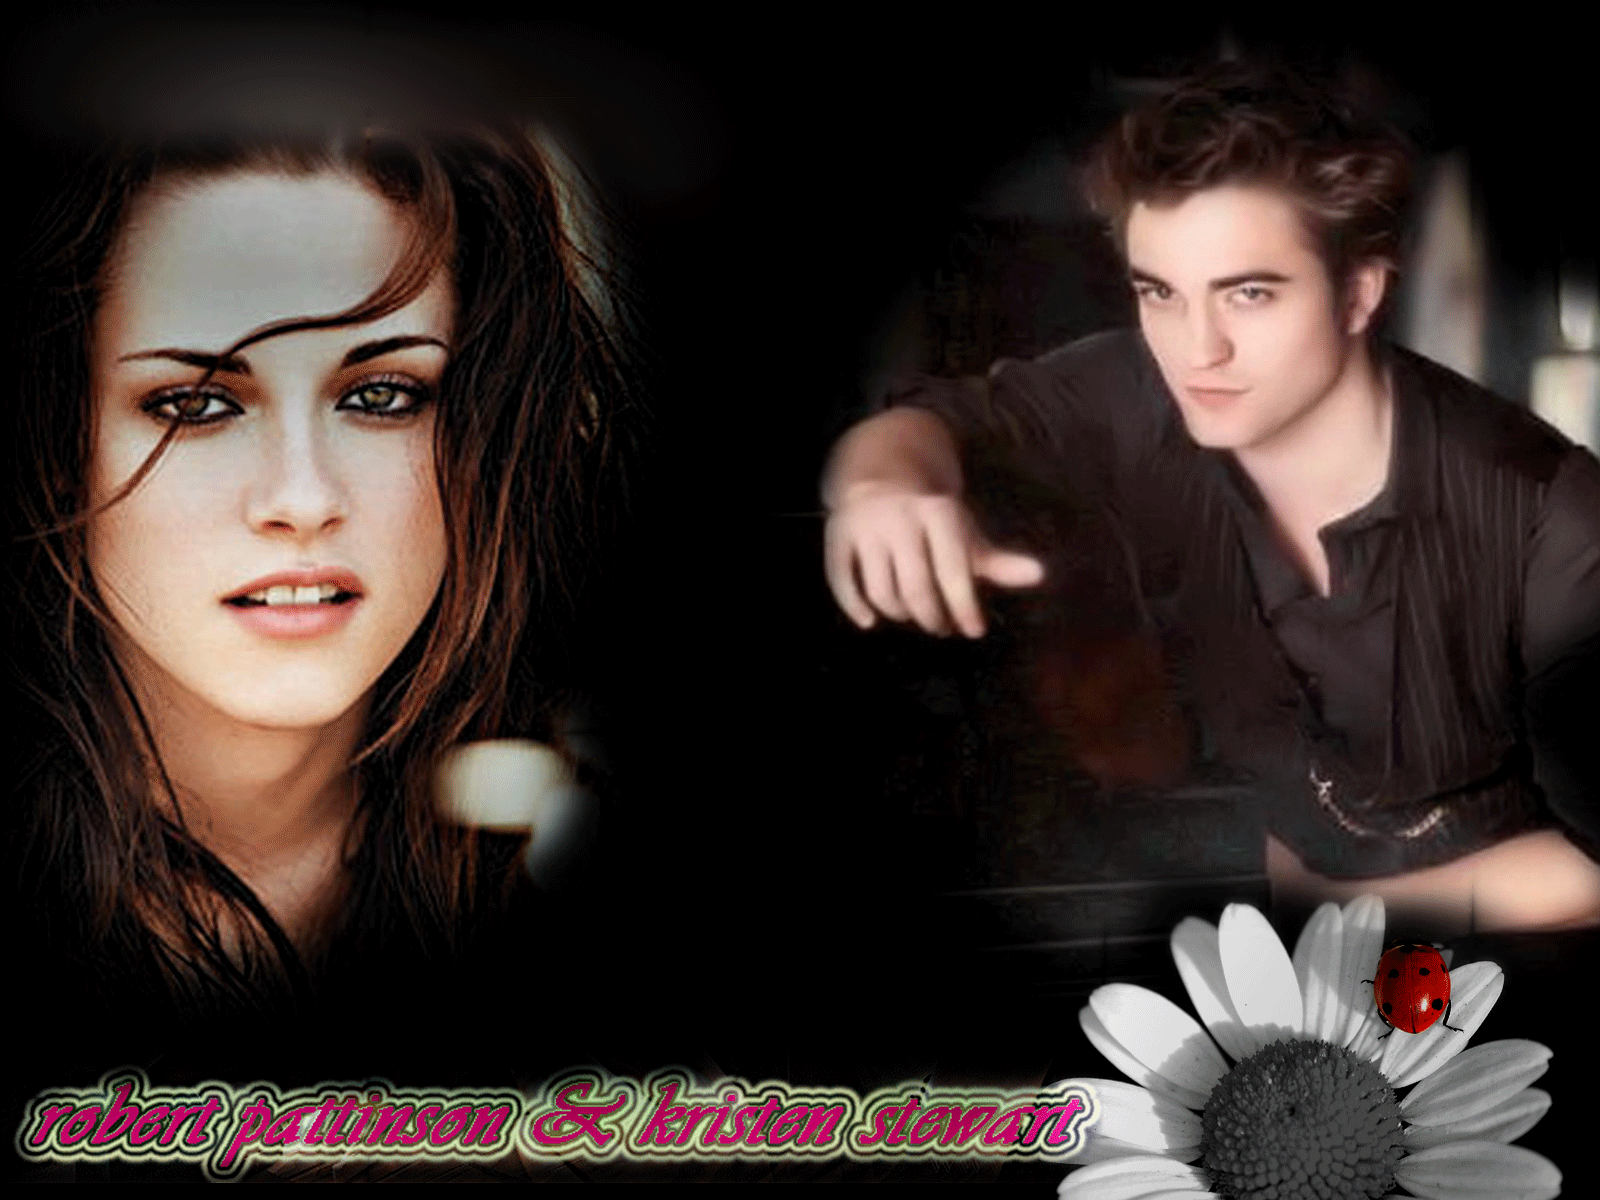 robert and kristen - Twilight Series Wallpaper (8652507 ...
 Kristen Stewart And Robert Pattinson Twilight Wallpaper